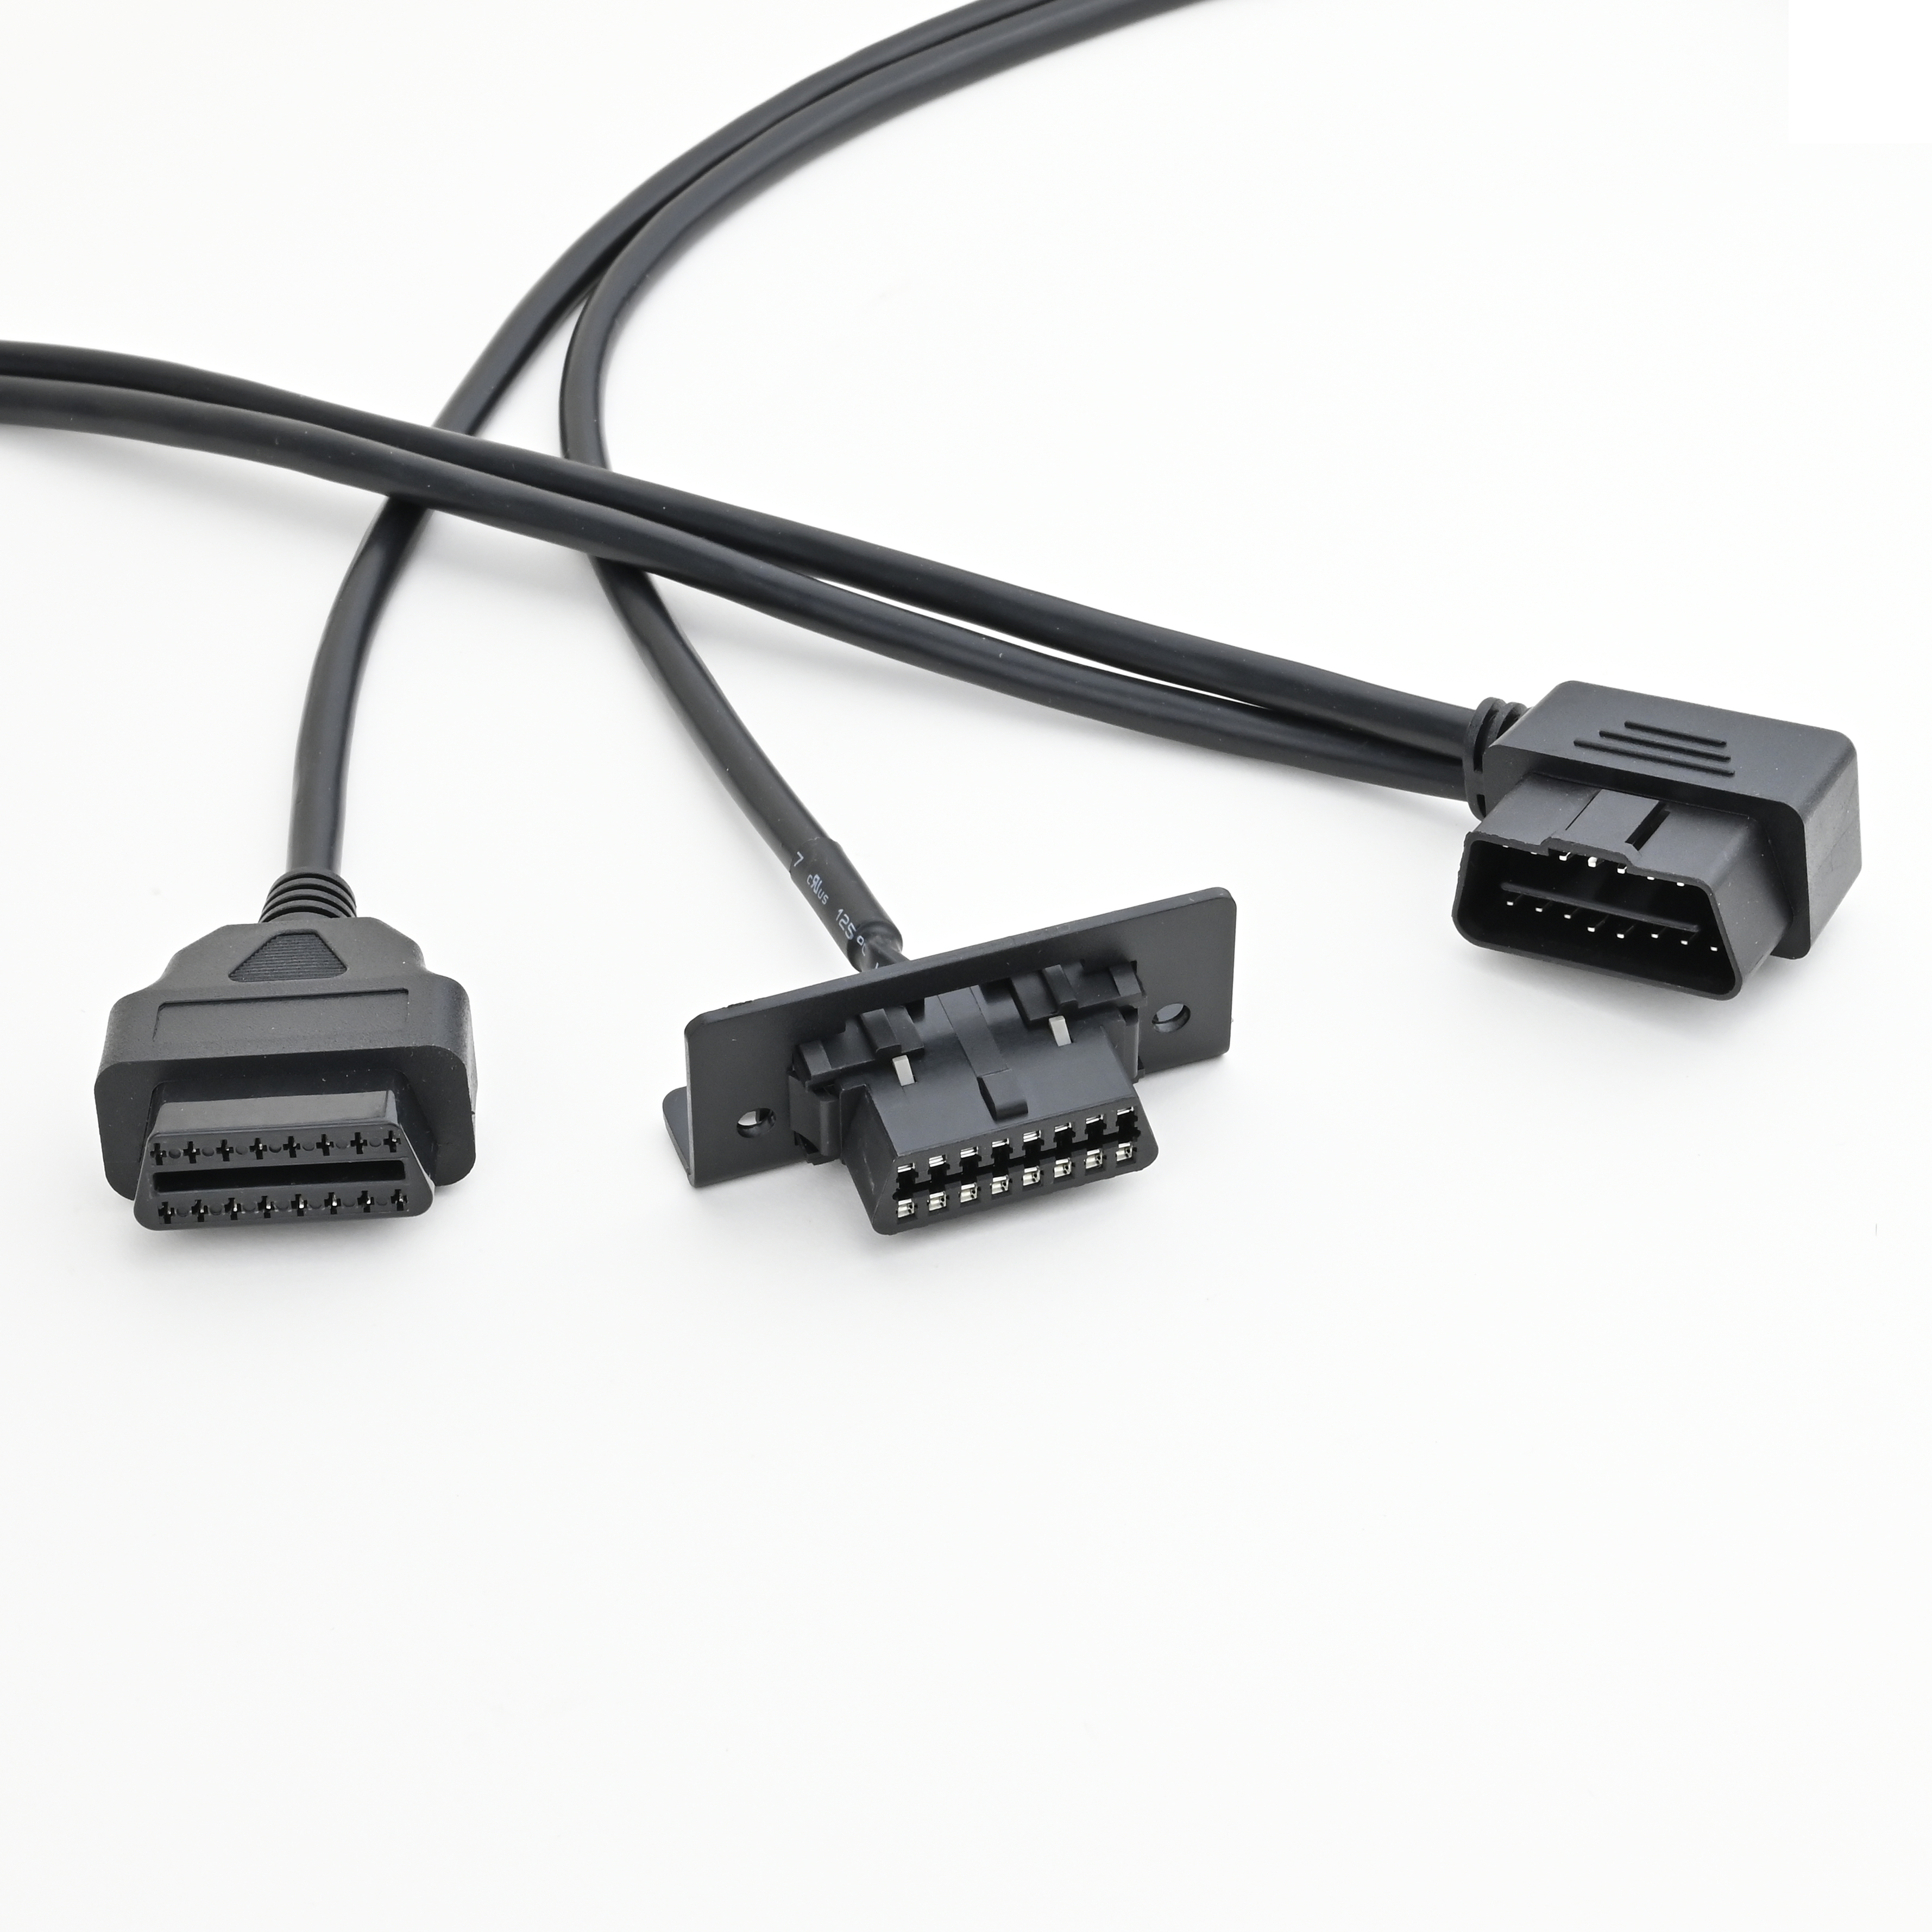 16pin OBDII Angle L Splitter Cable with Bracket for KIA Mazda